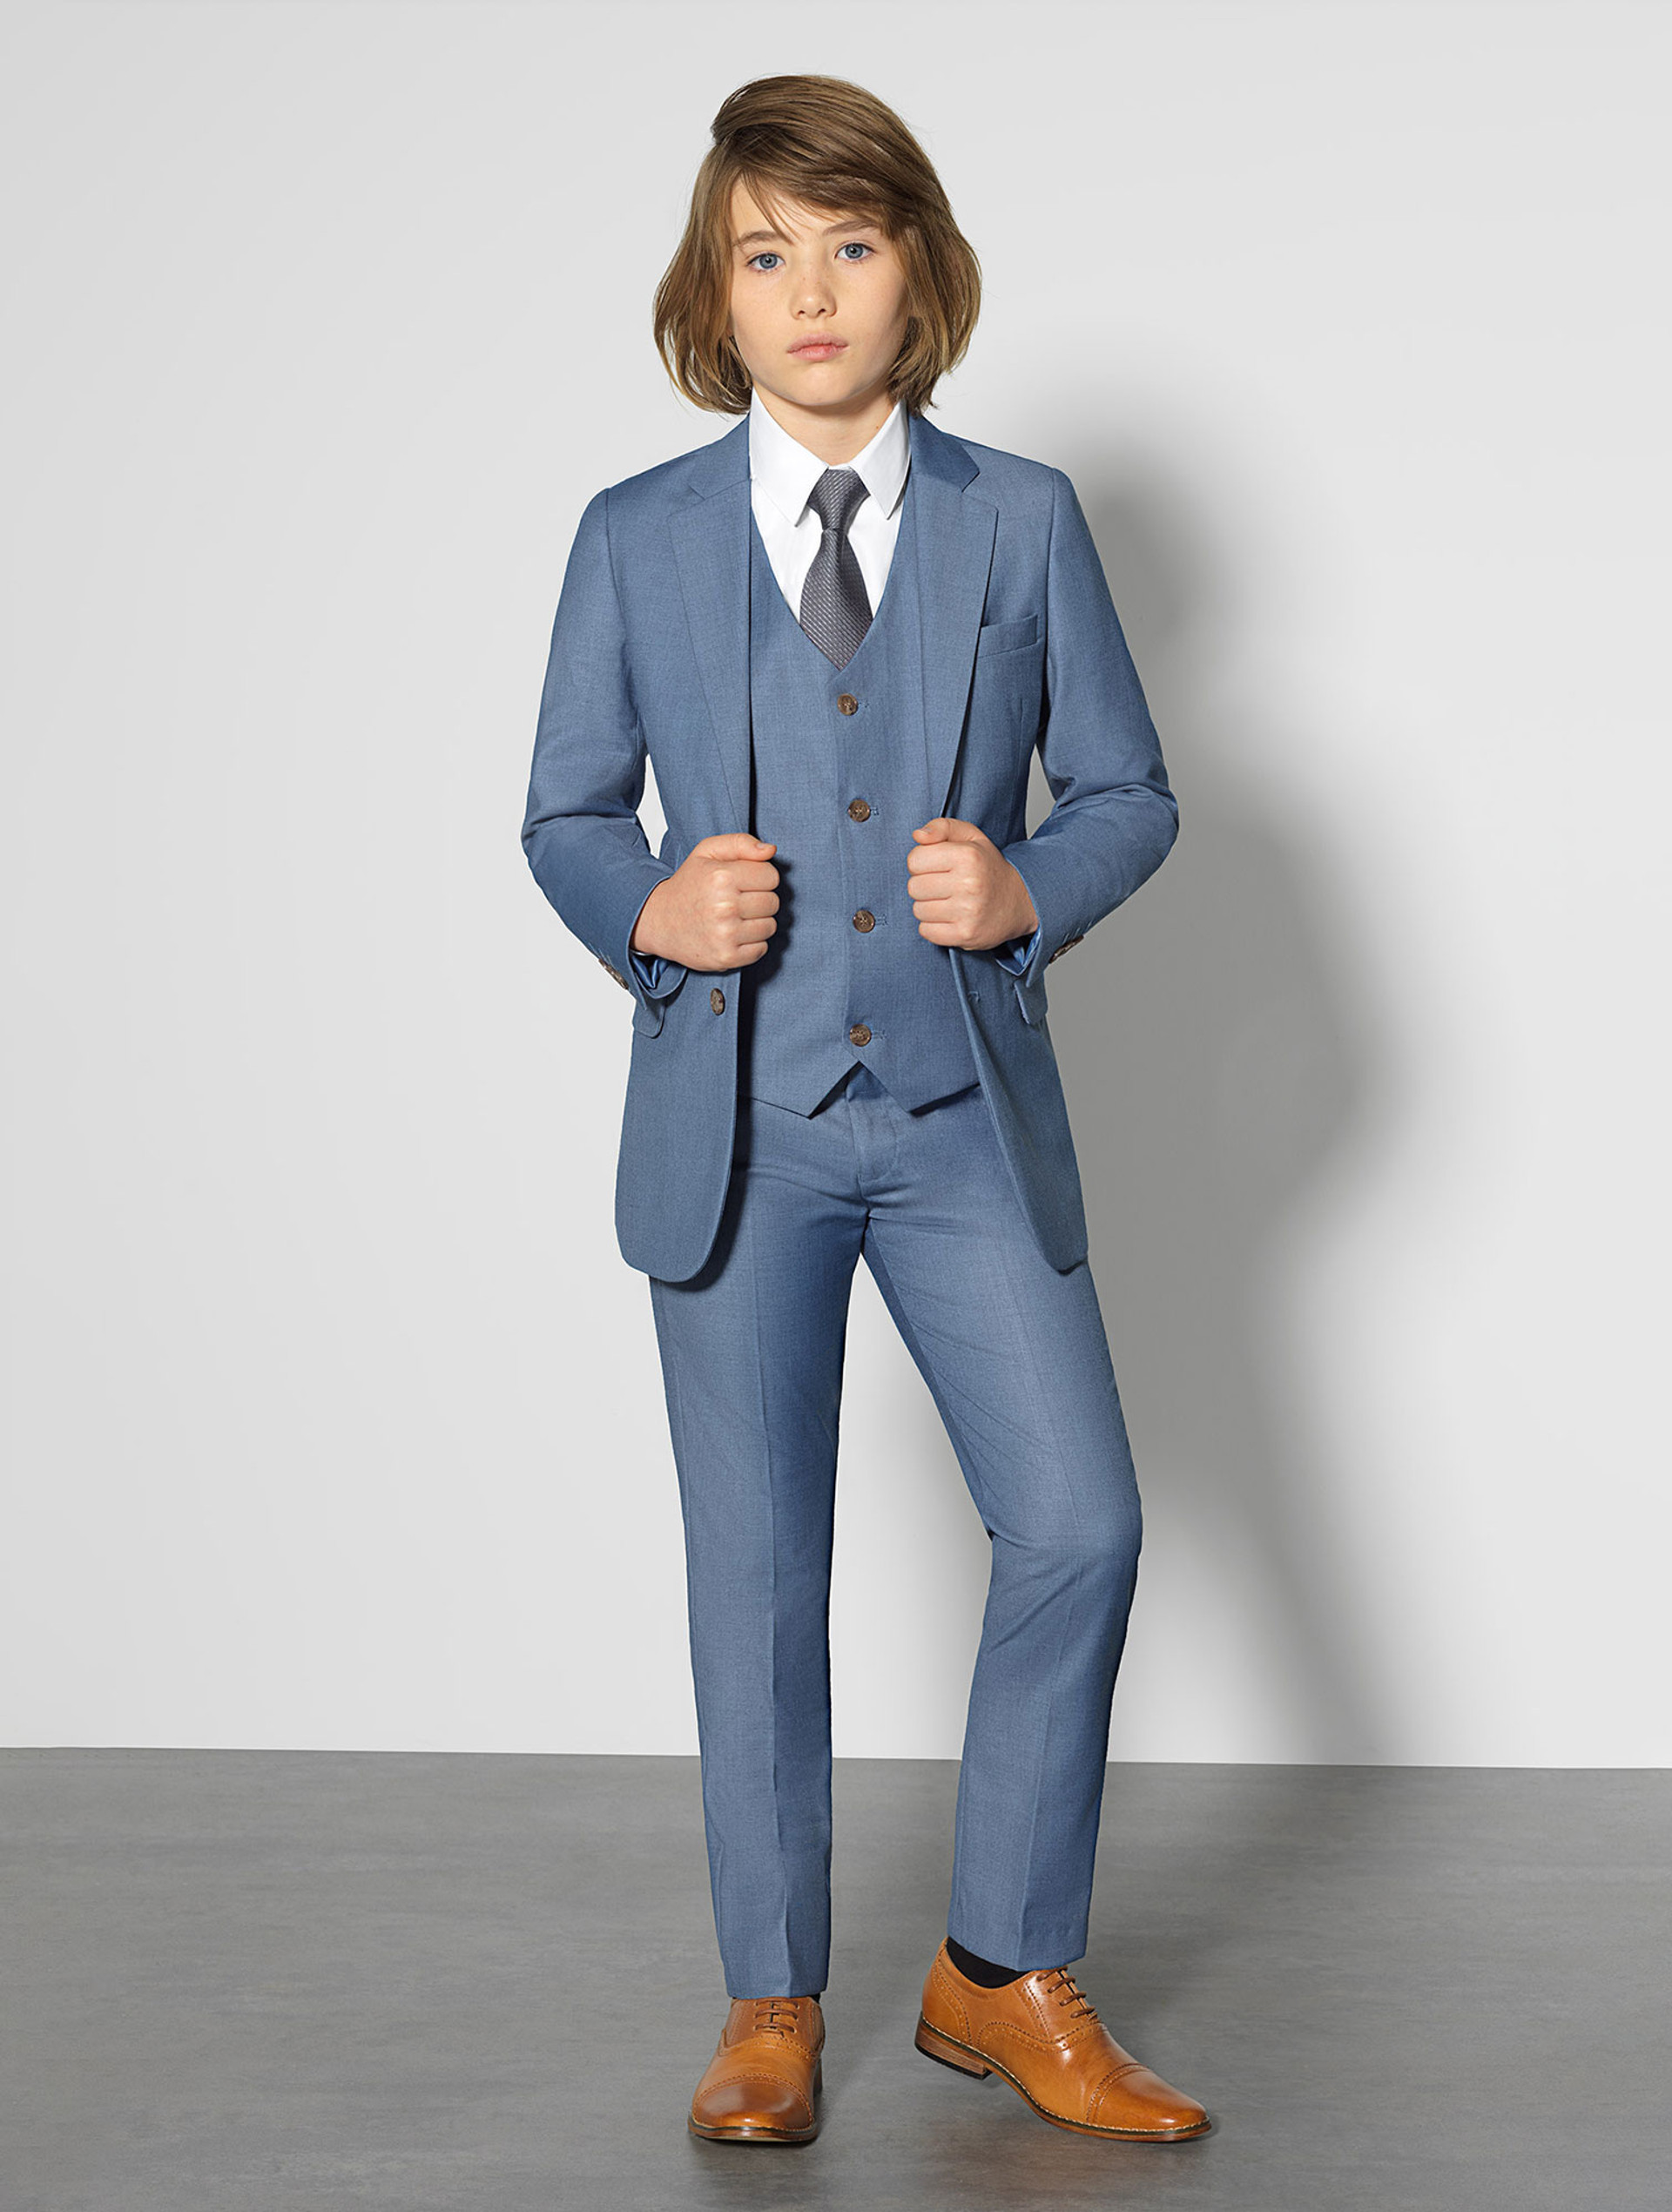 Boys blue chambray suit | Boys blue wedding suit | Boys suits | Sampson